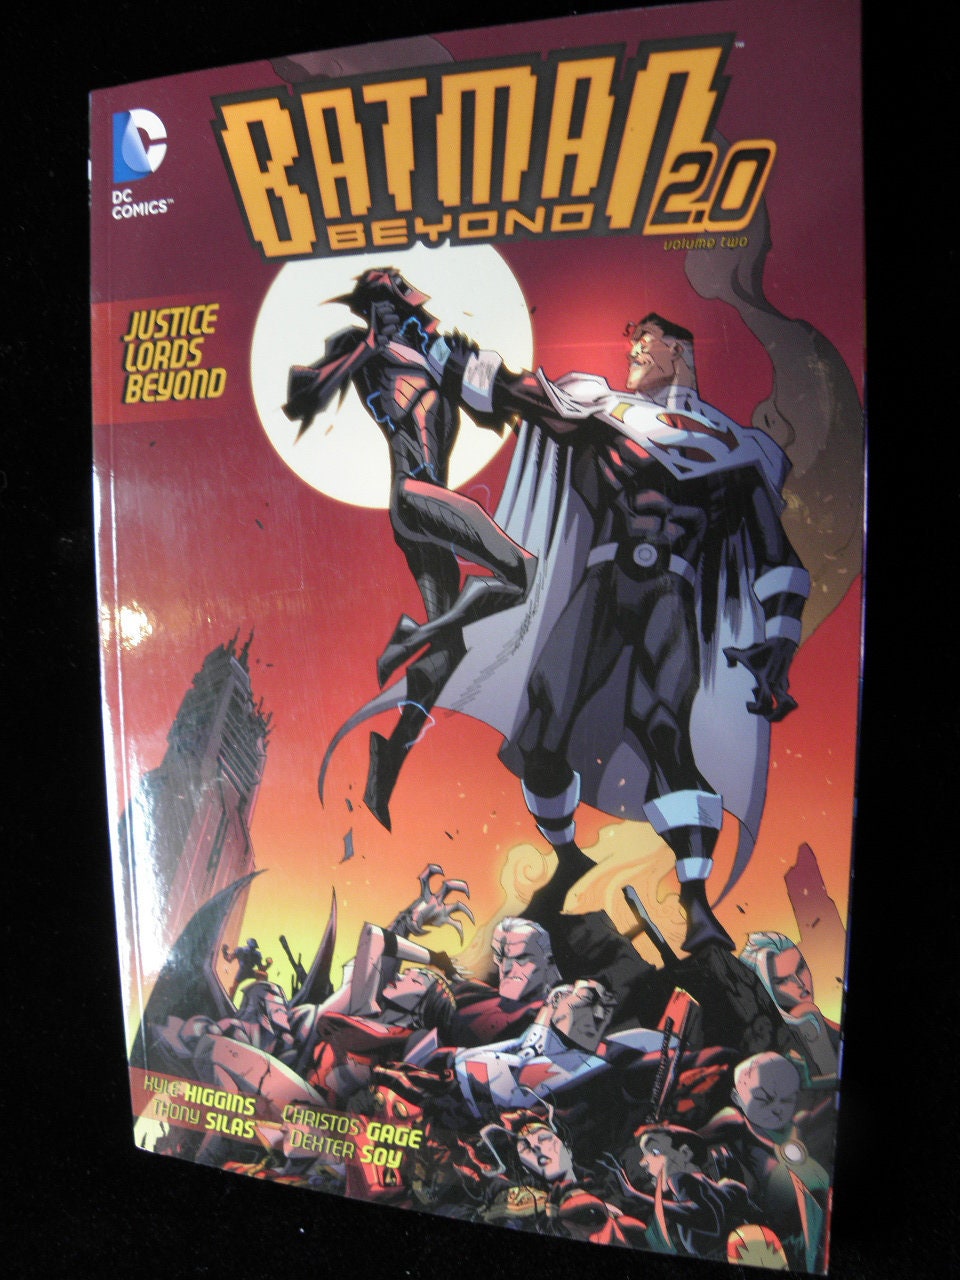 New COPY Batman Graphic Novel Beyond Justice Lords Beyond - Etsy Ireland